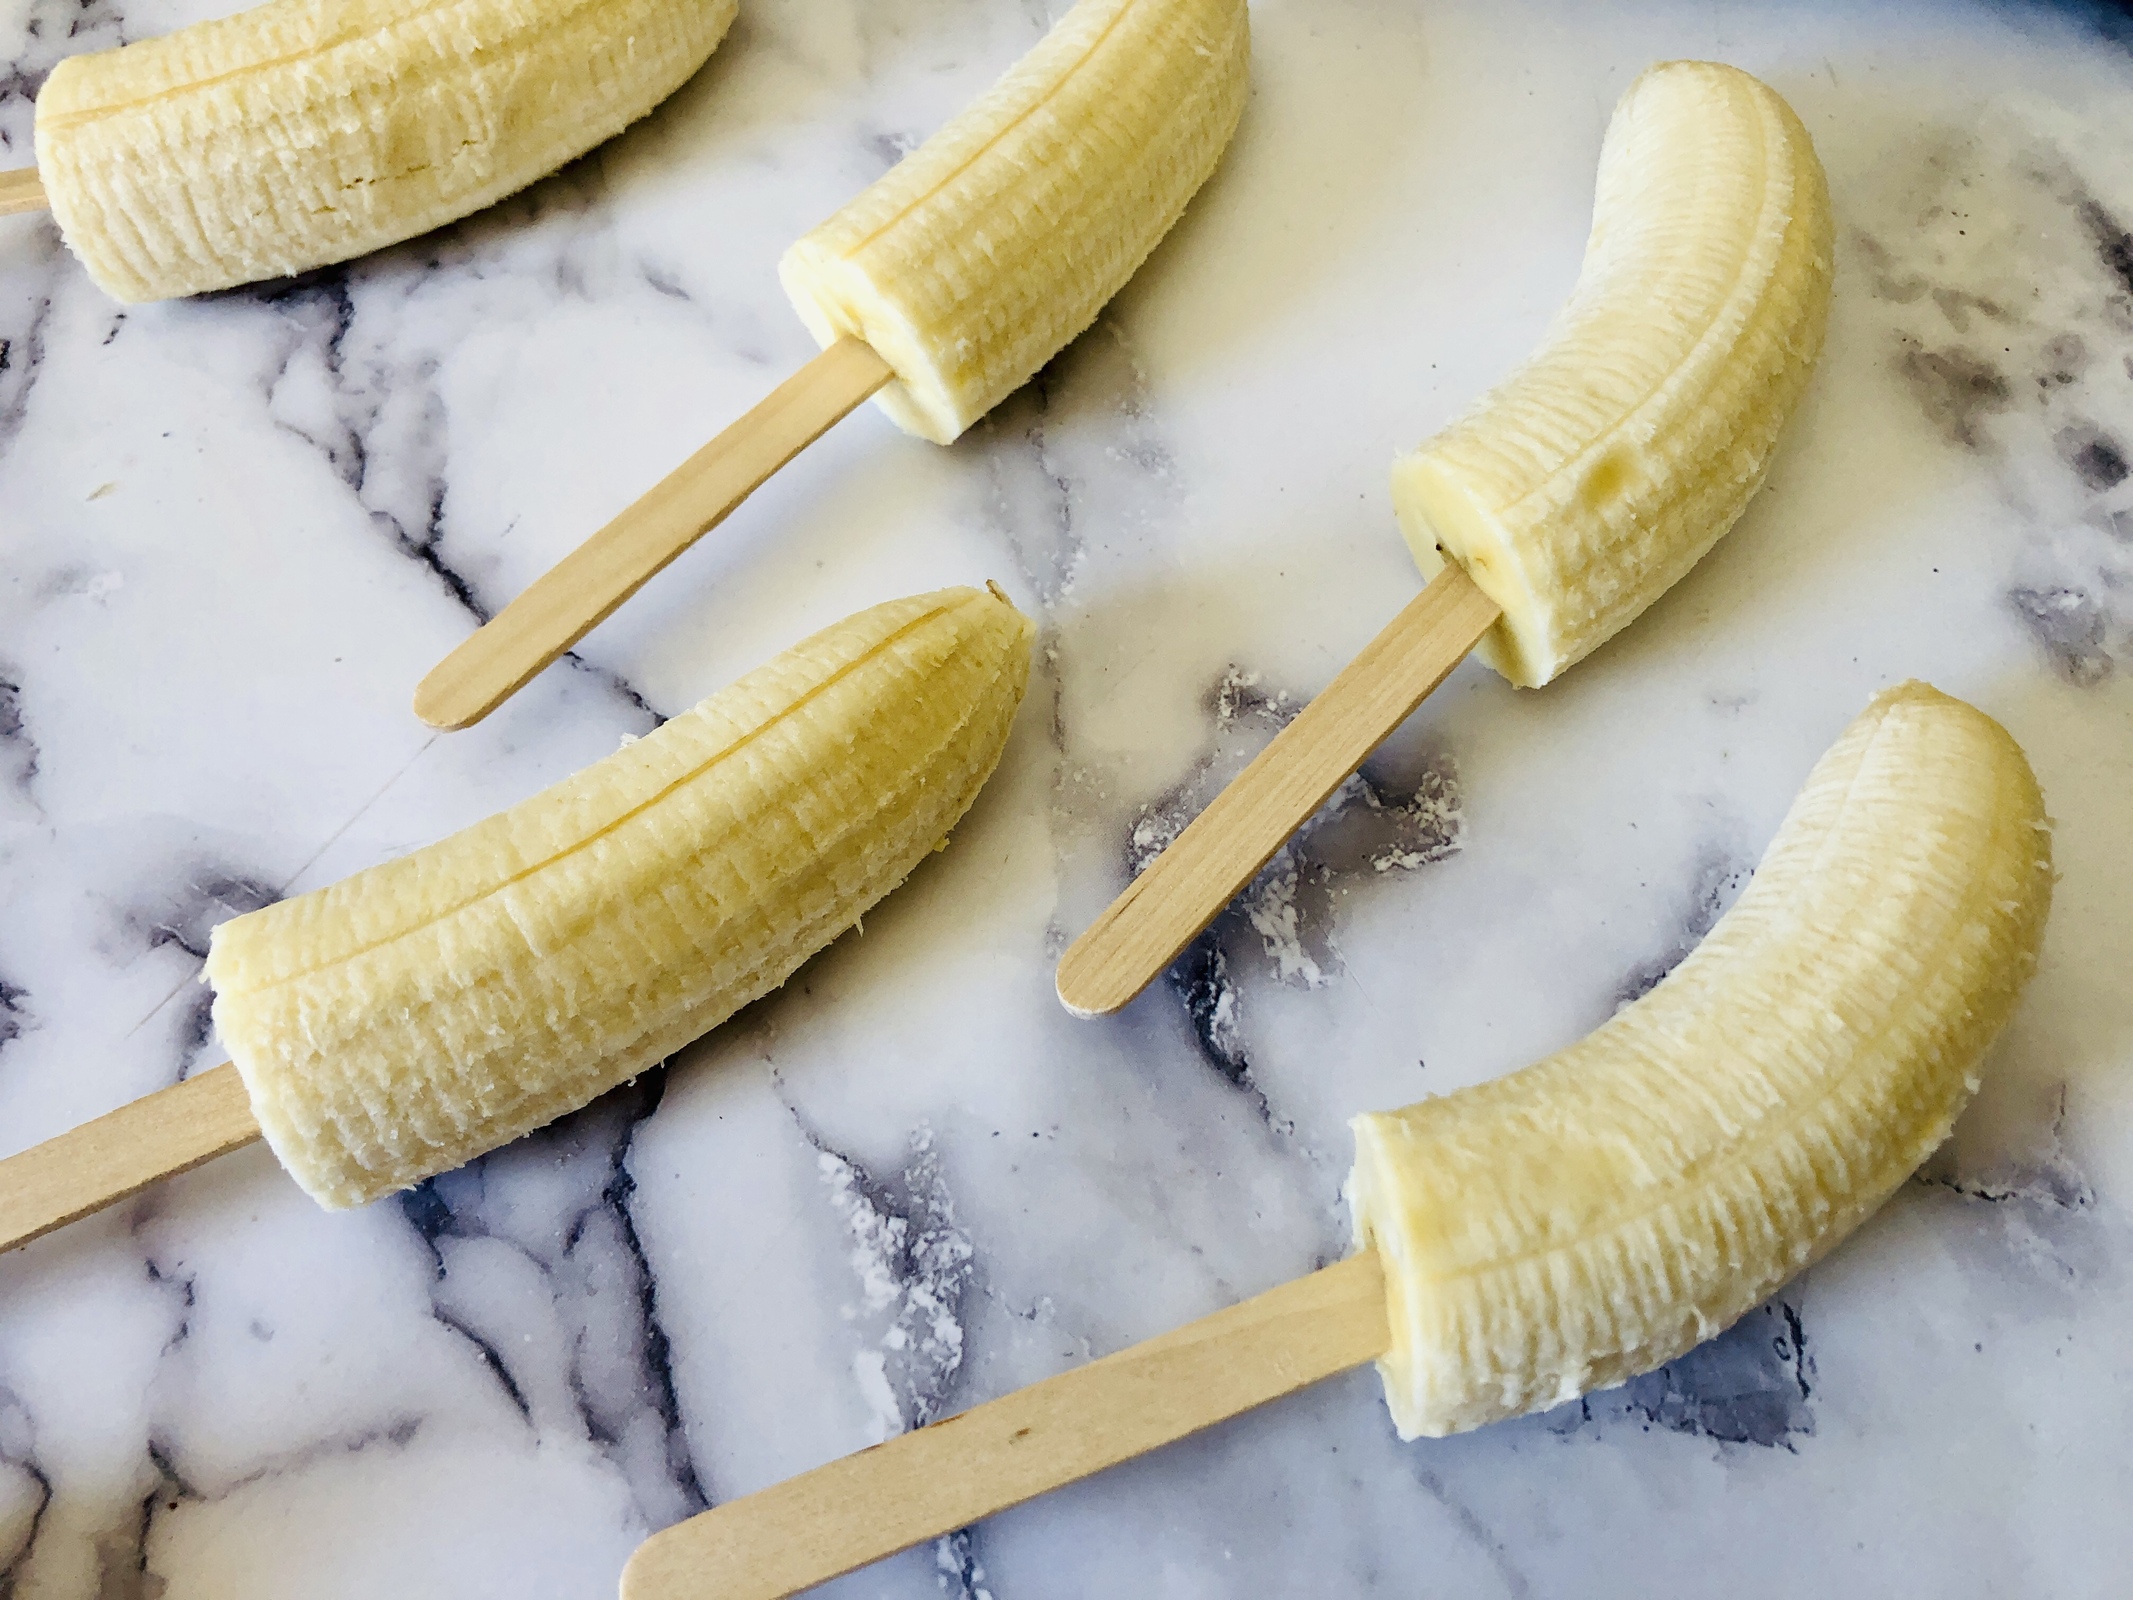 Preparing to make frozen yogurt banana pops. Bananas with popsicle sticks in them. 